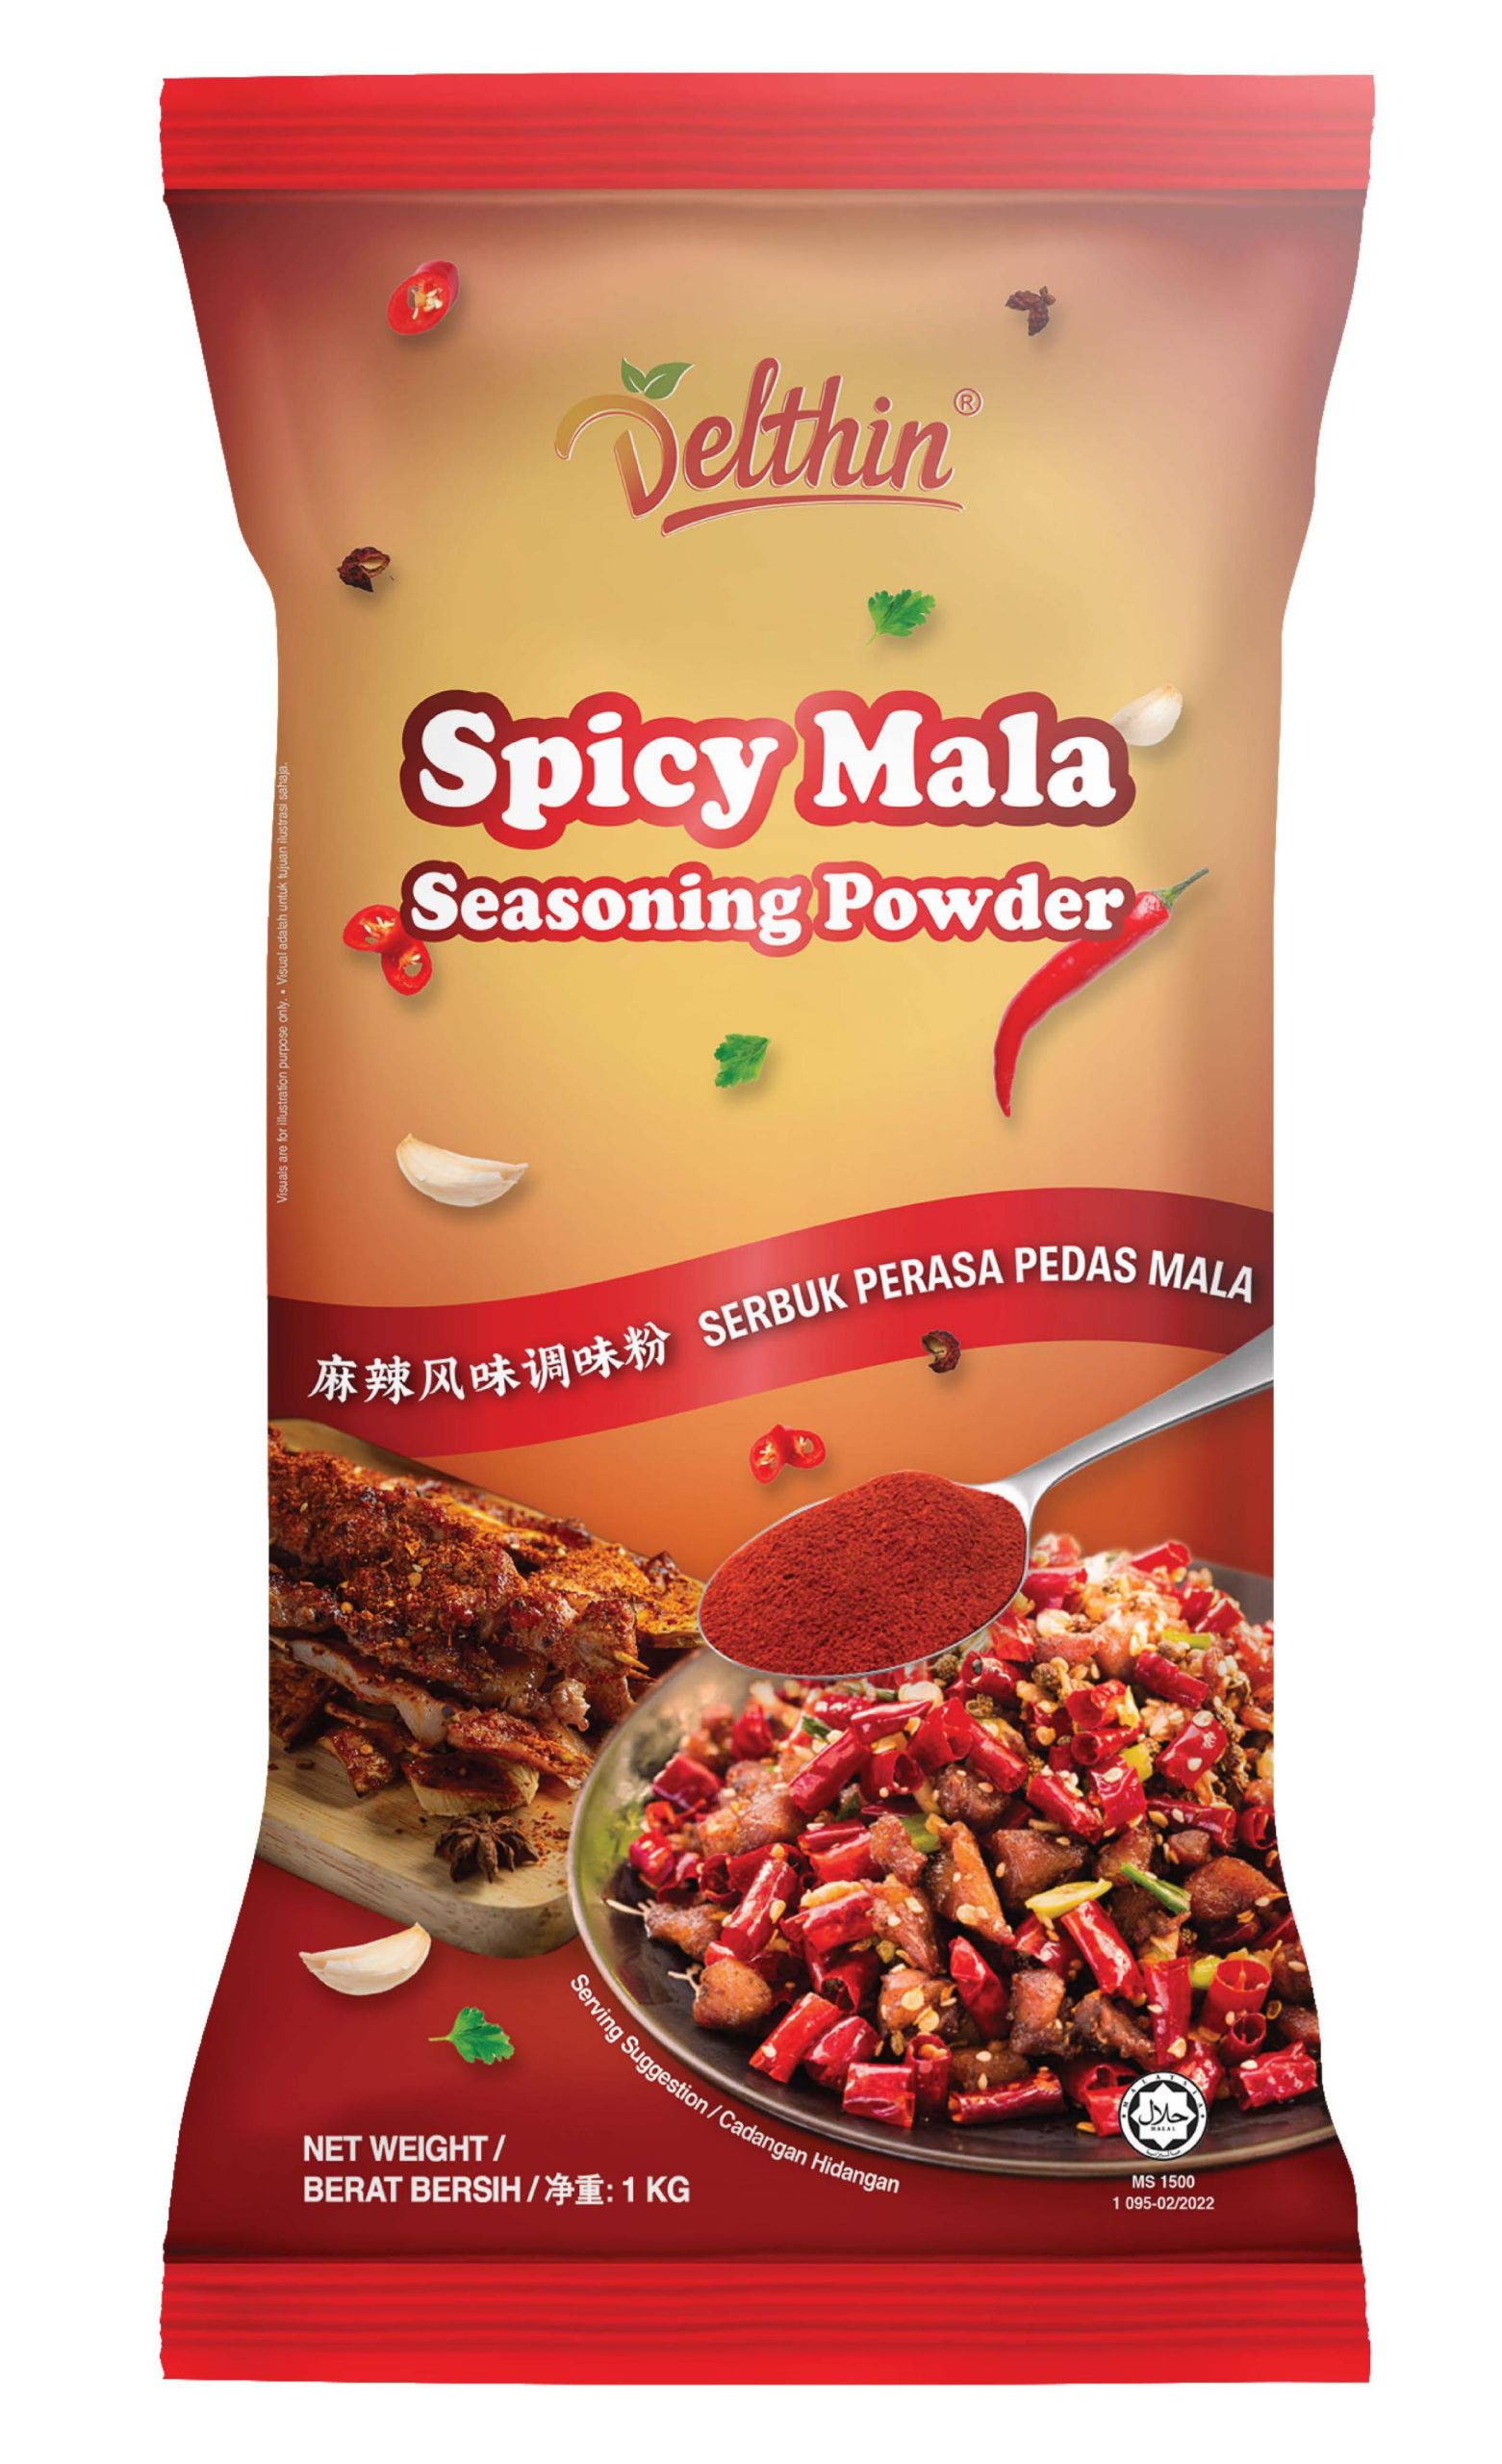 Delthin Spicy Mala Seasoning Powder scaled